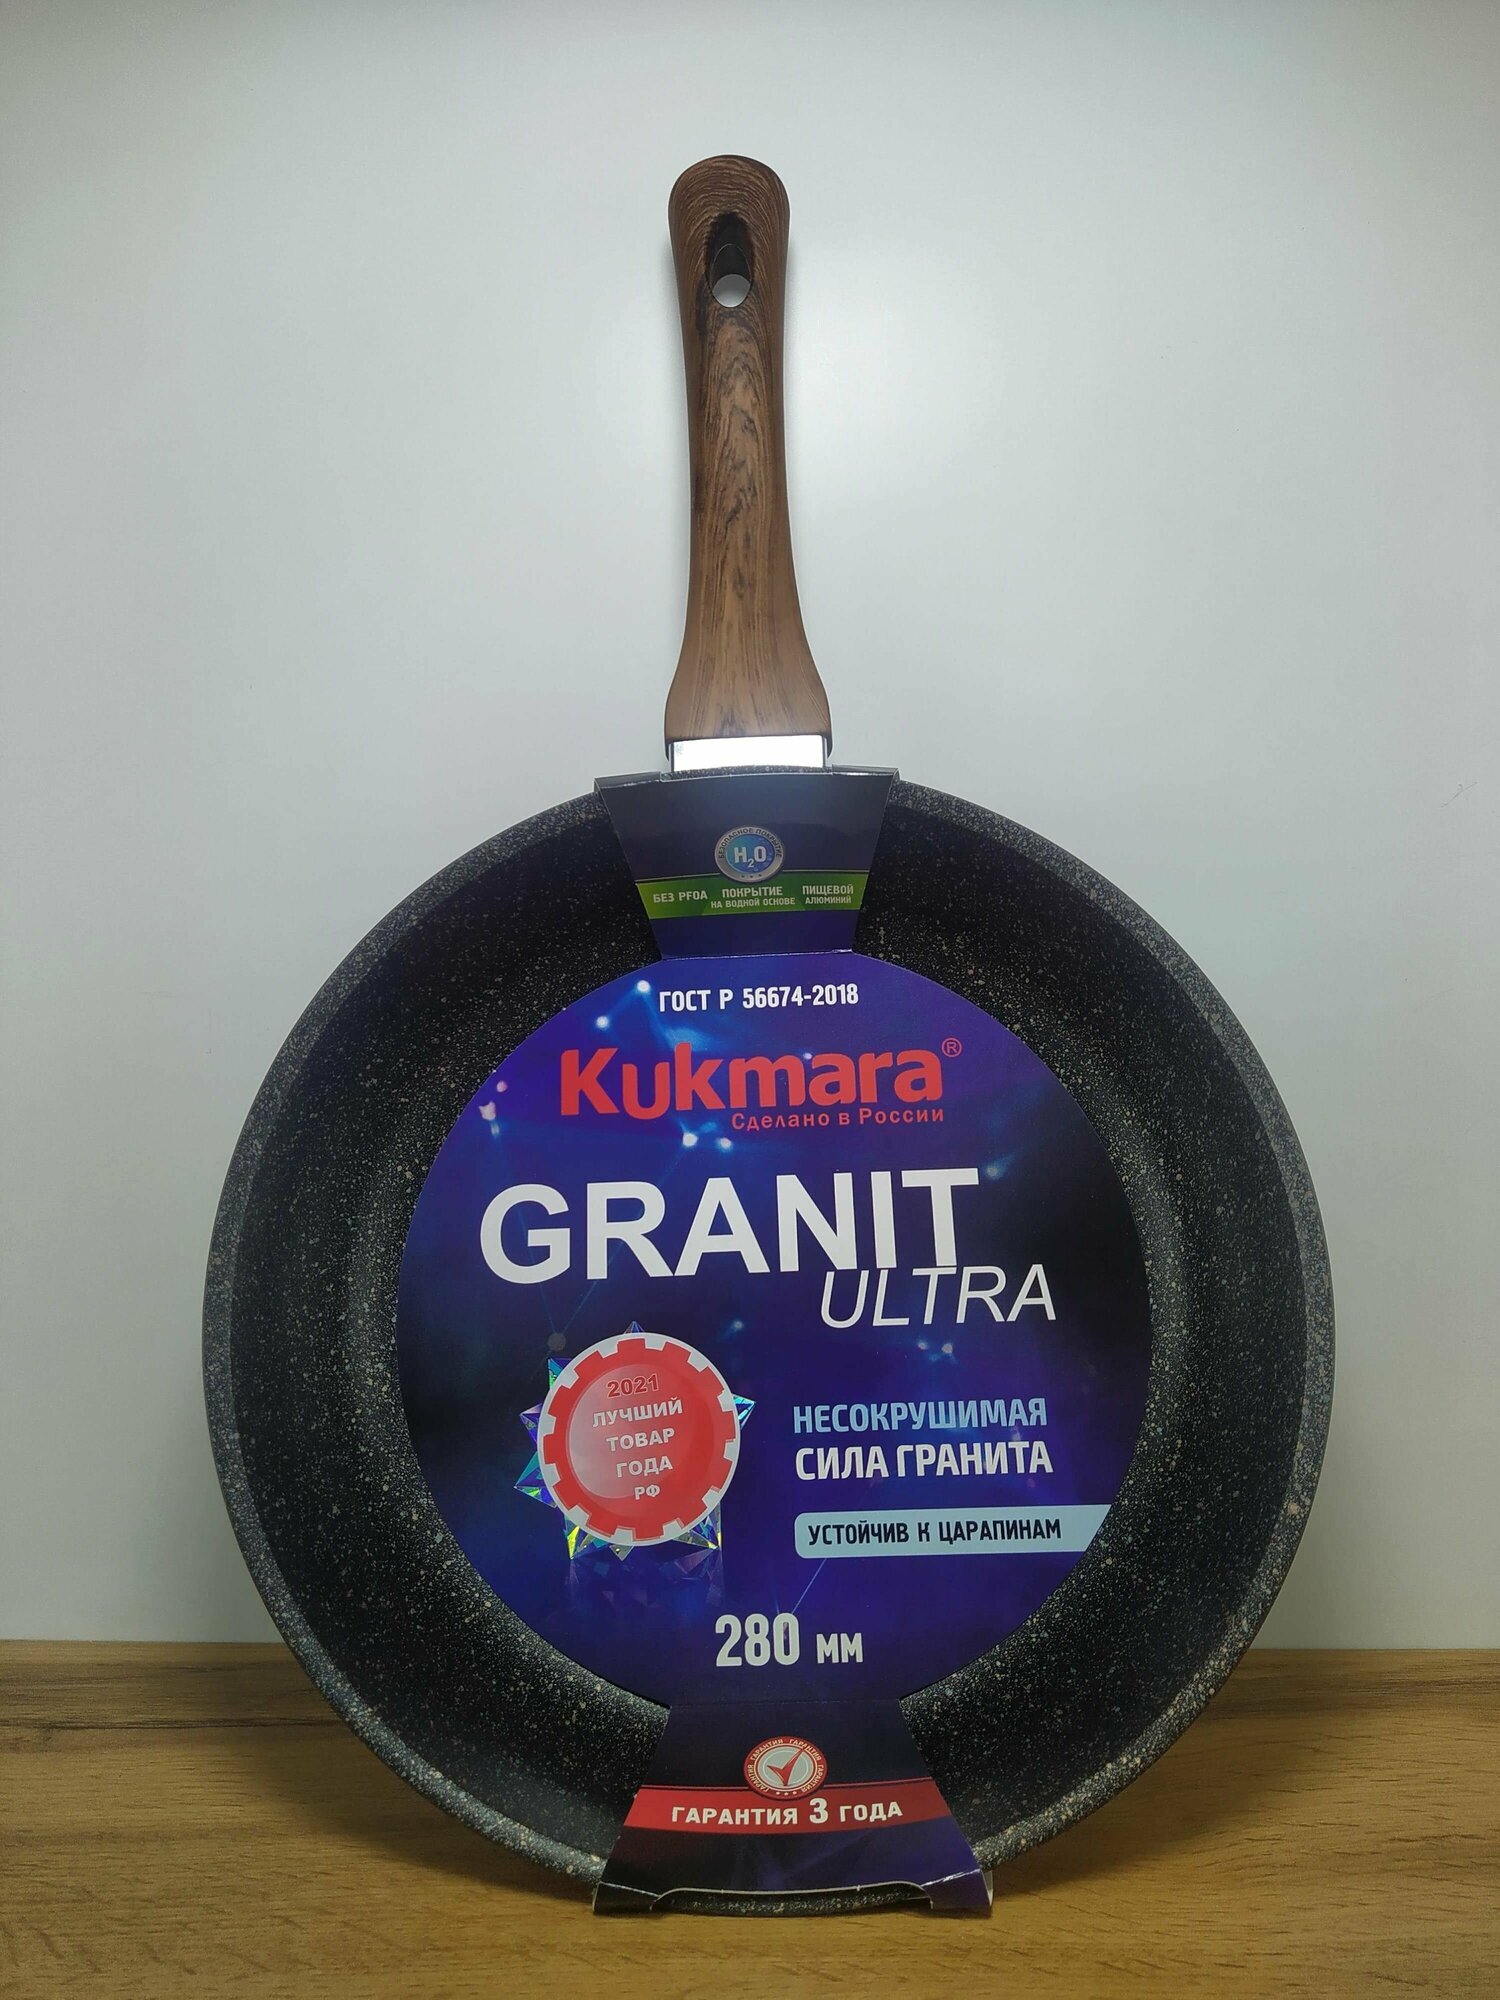 Kukmara Сковорода 28 см АП, линия "Granit Ultra" (Original)